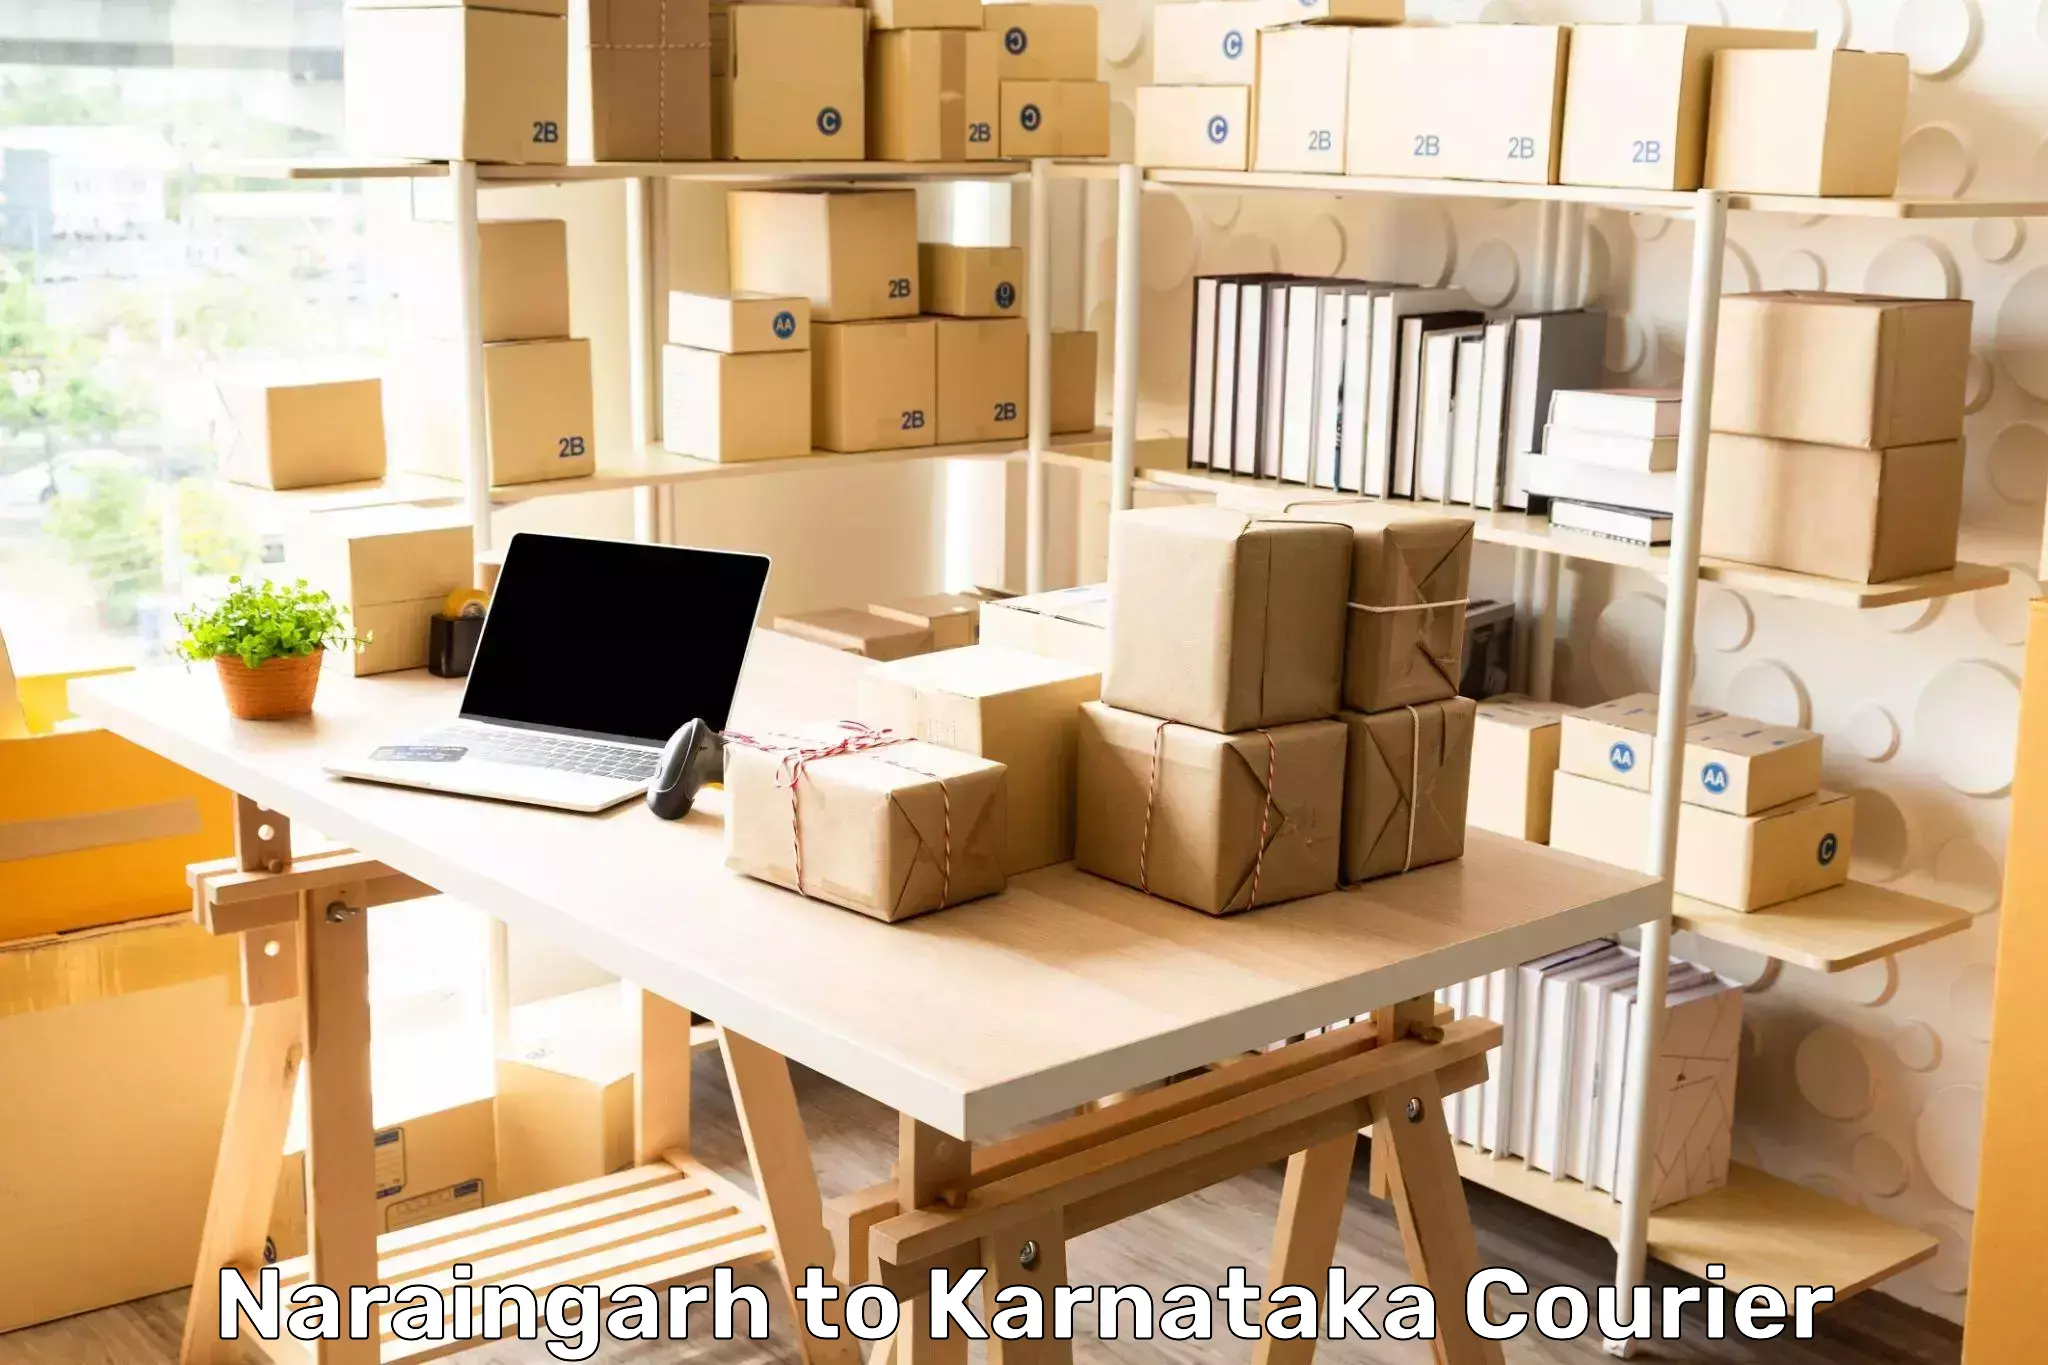 Courier service booking Naraingarh to Bangalore